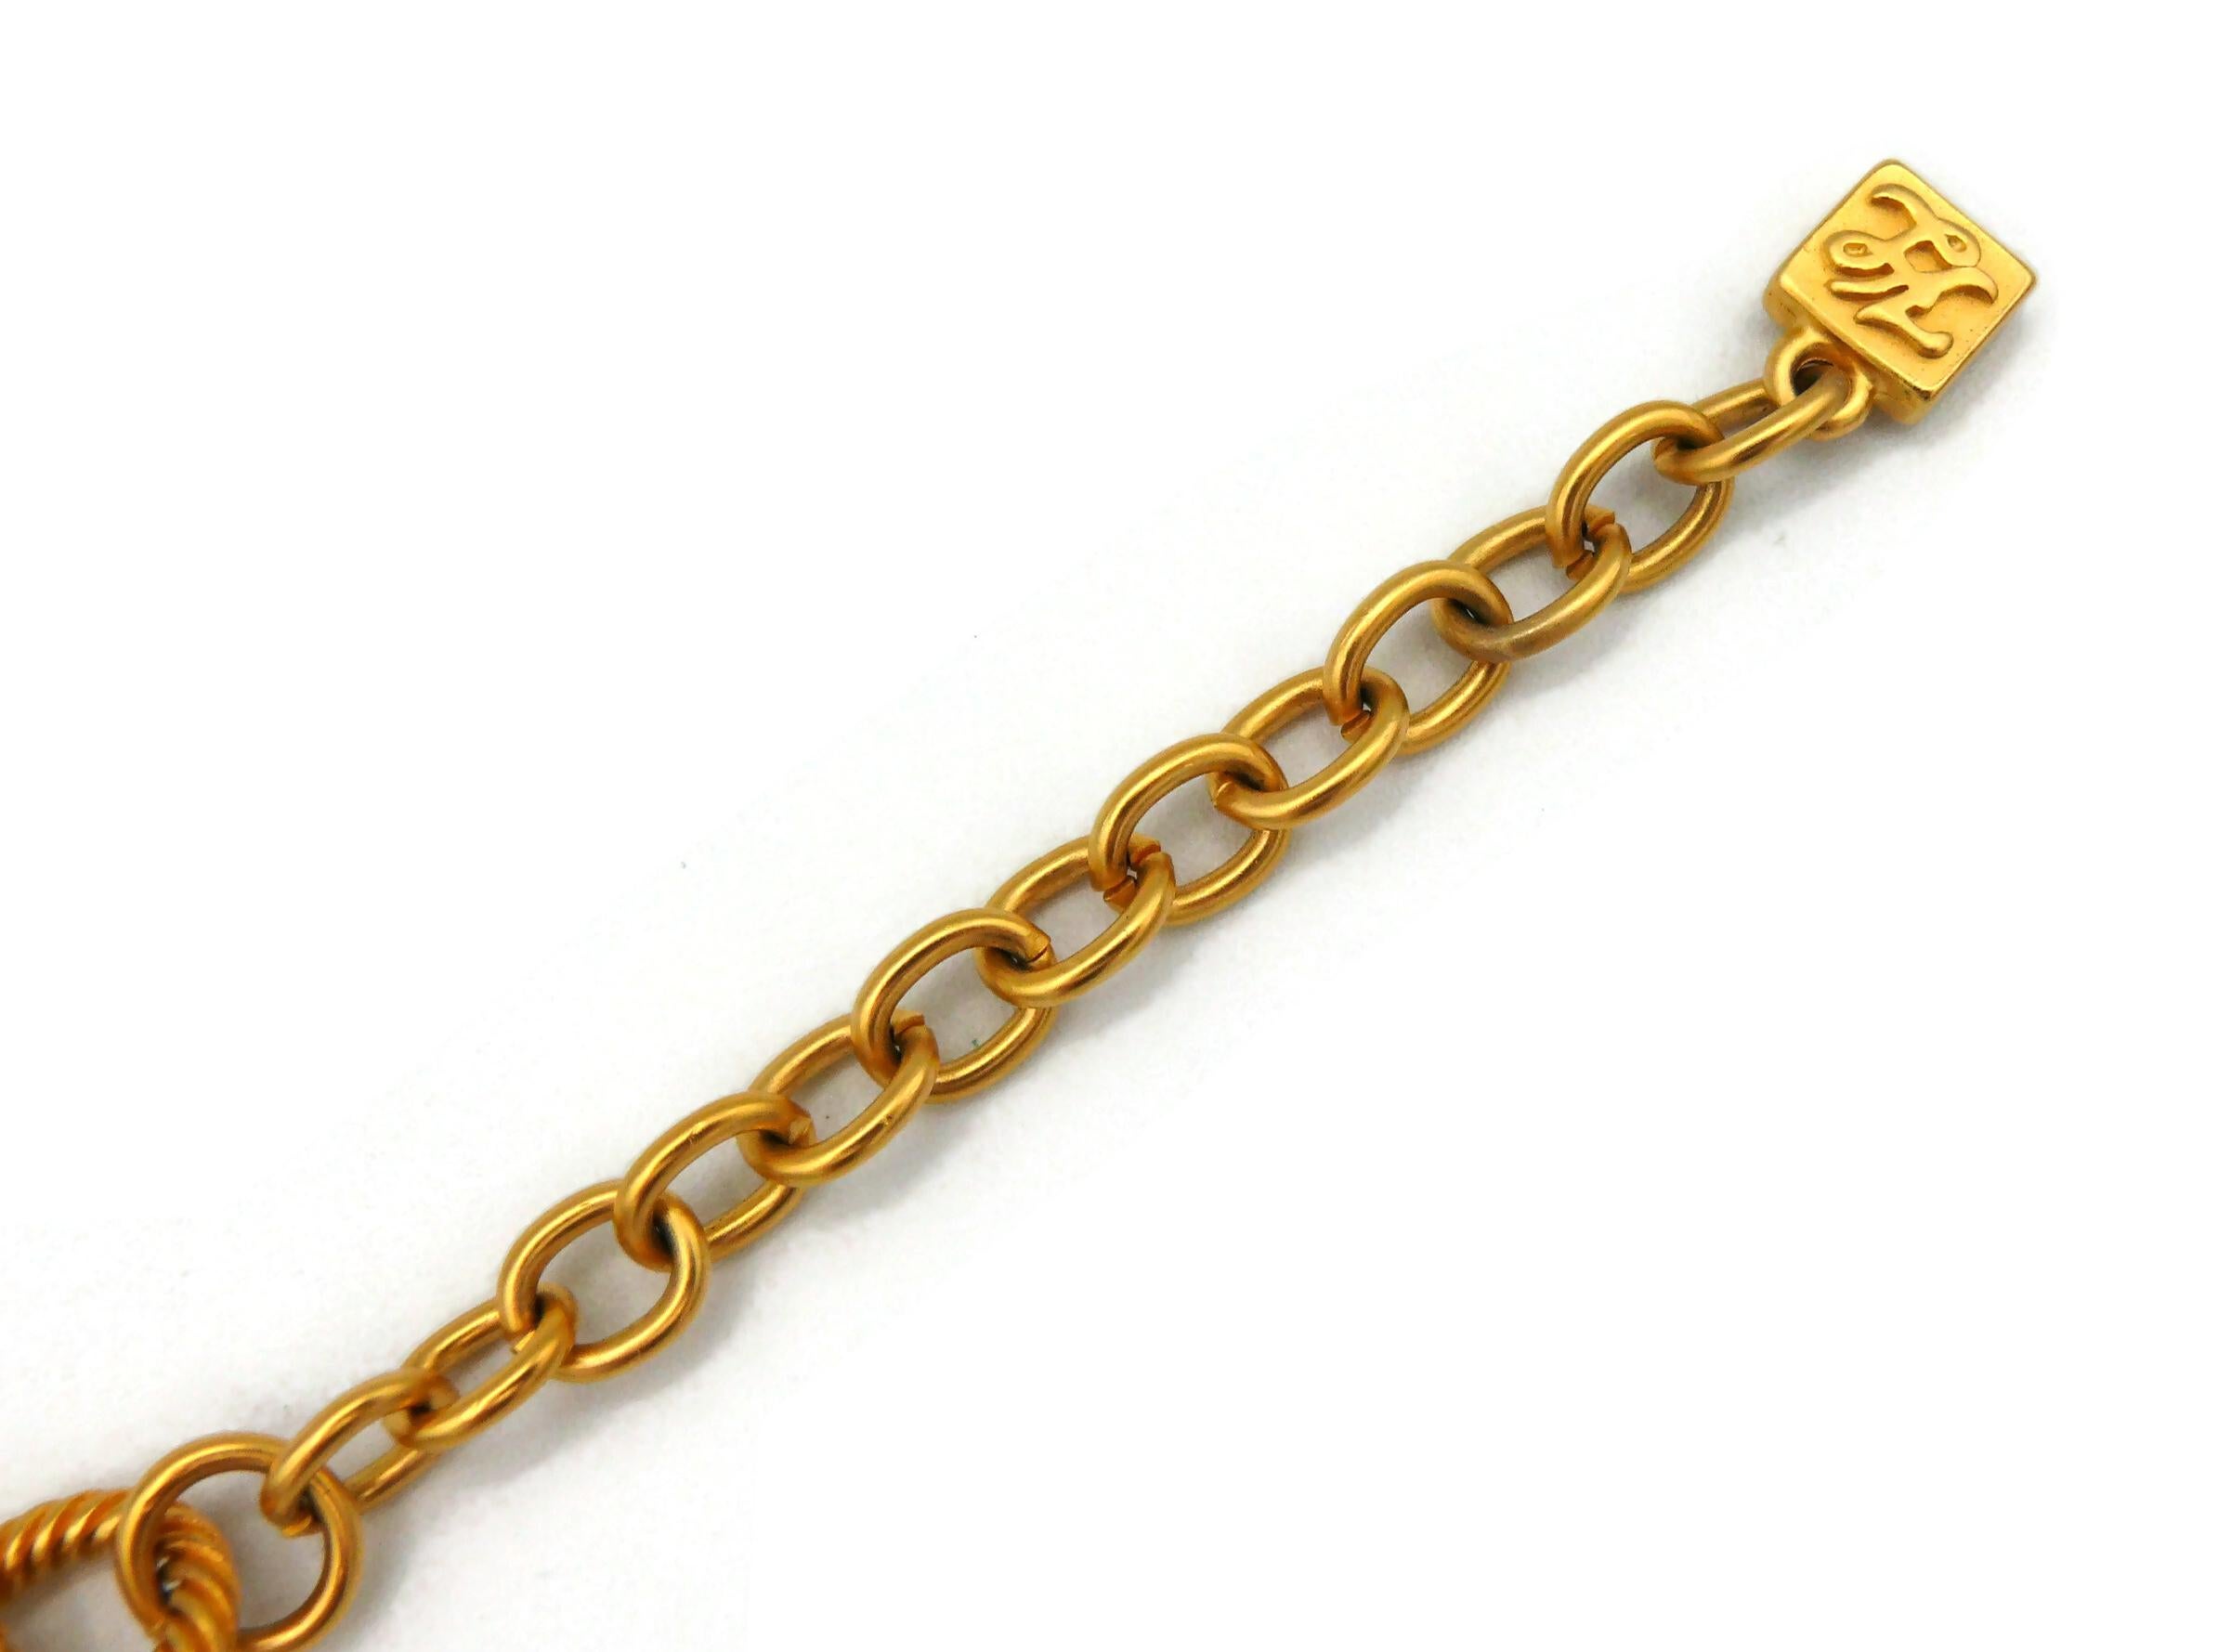 KARL LAGERFELD Vintage Paris Tribute Charm Necklace 2